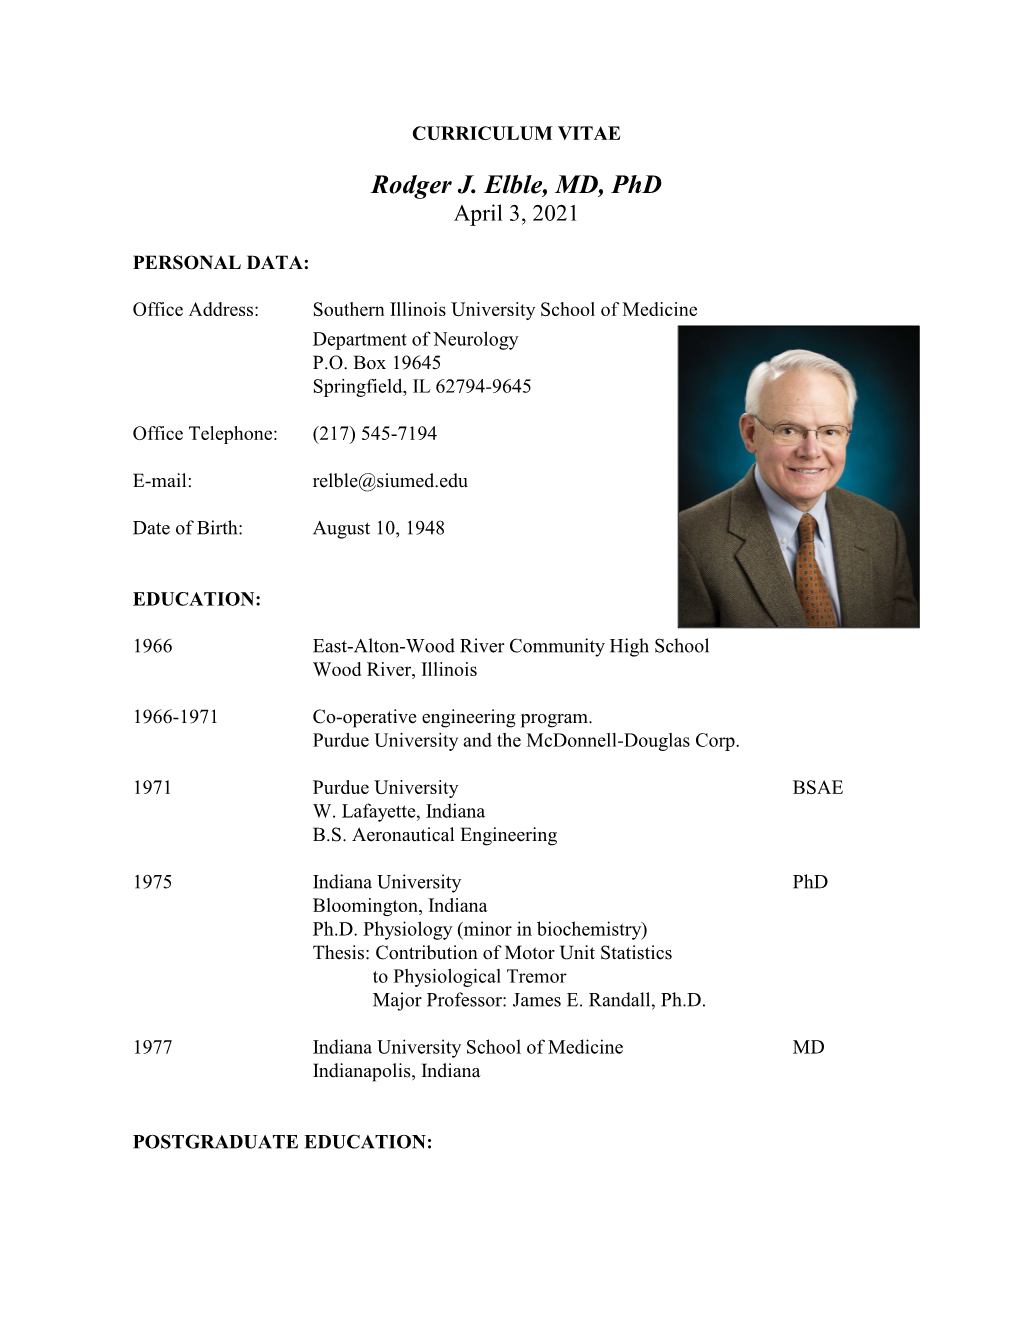 Rodger J. Elble, MD, Phd April 3, 2021